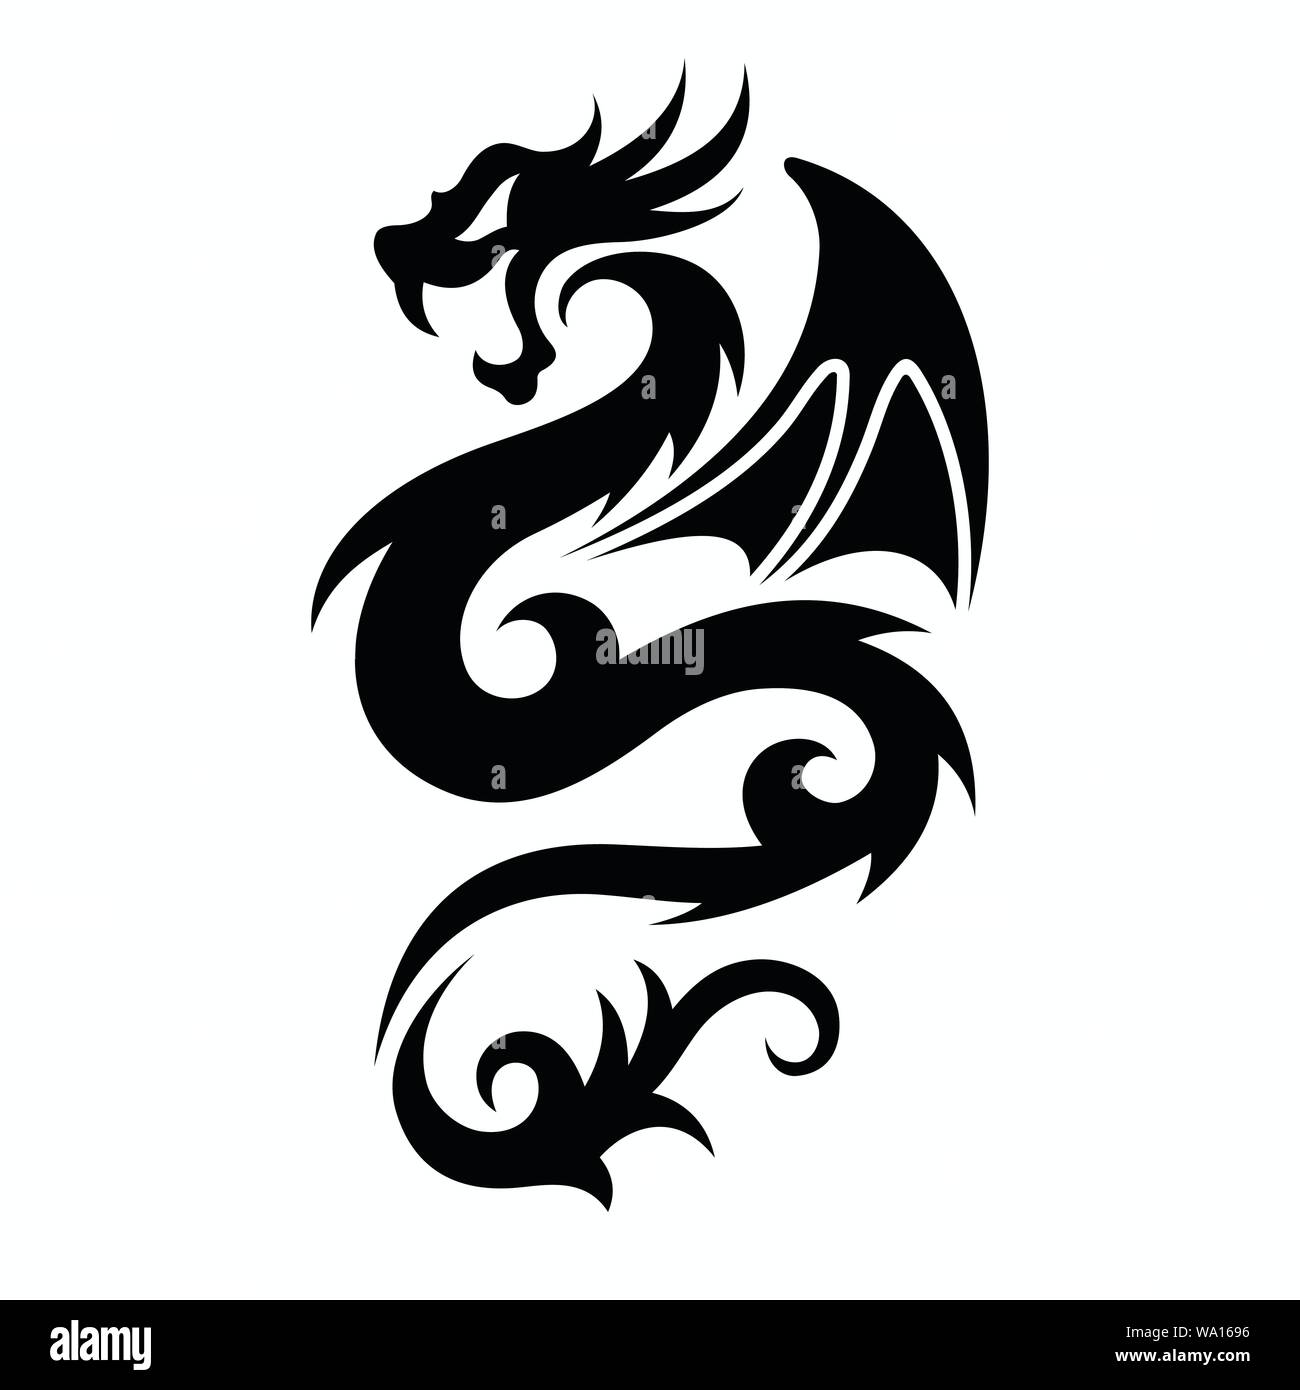 Vector illustration of dragon tattoo design Stock Vector Image ...